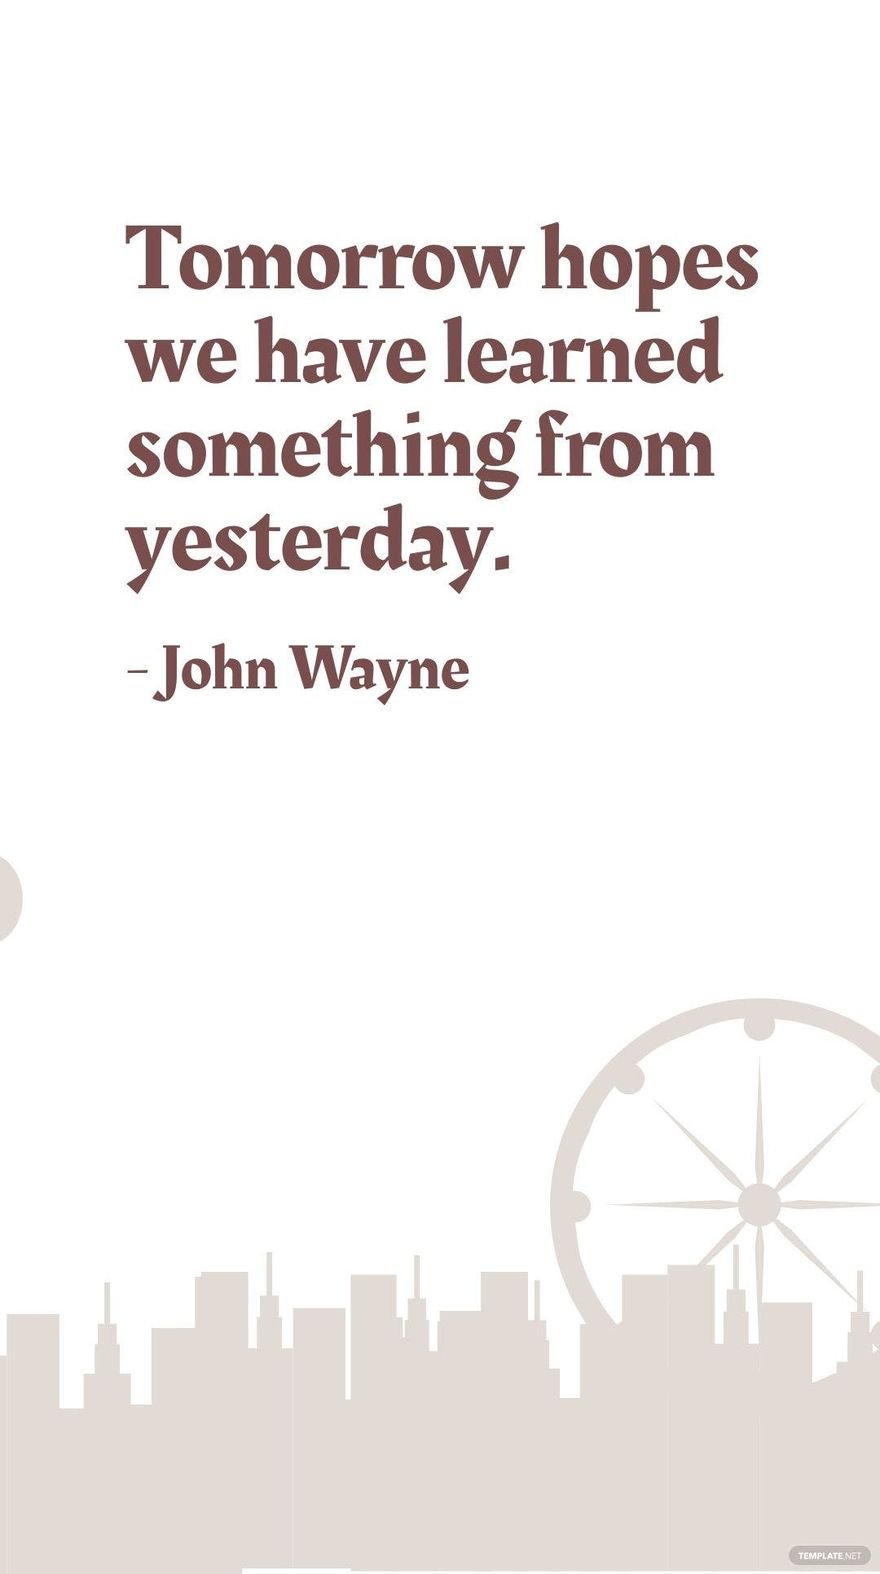 John Wayne - Tomorrow hopes we have learned something from yesterday.